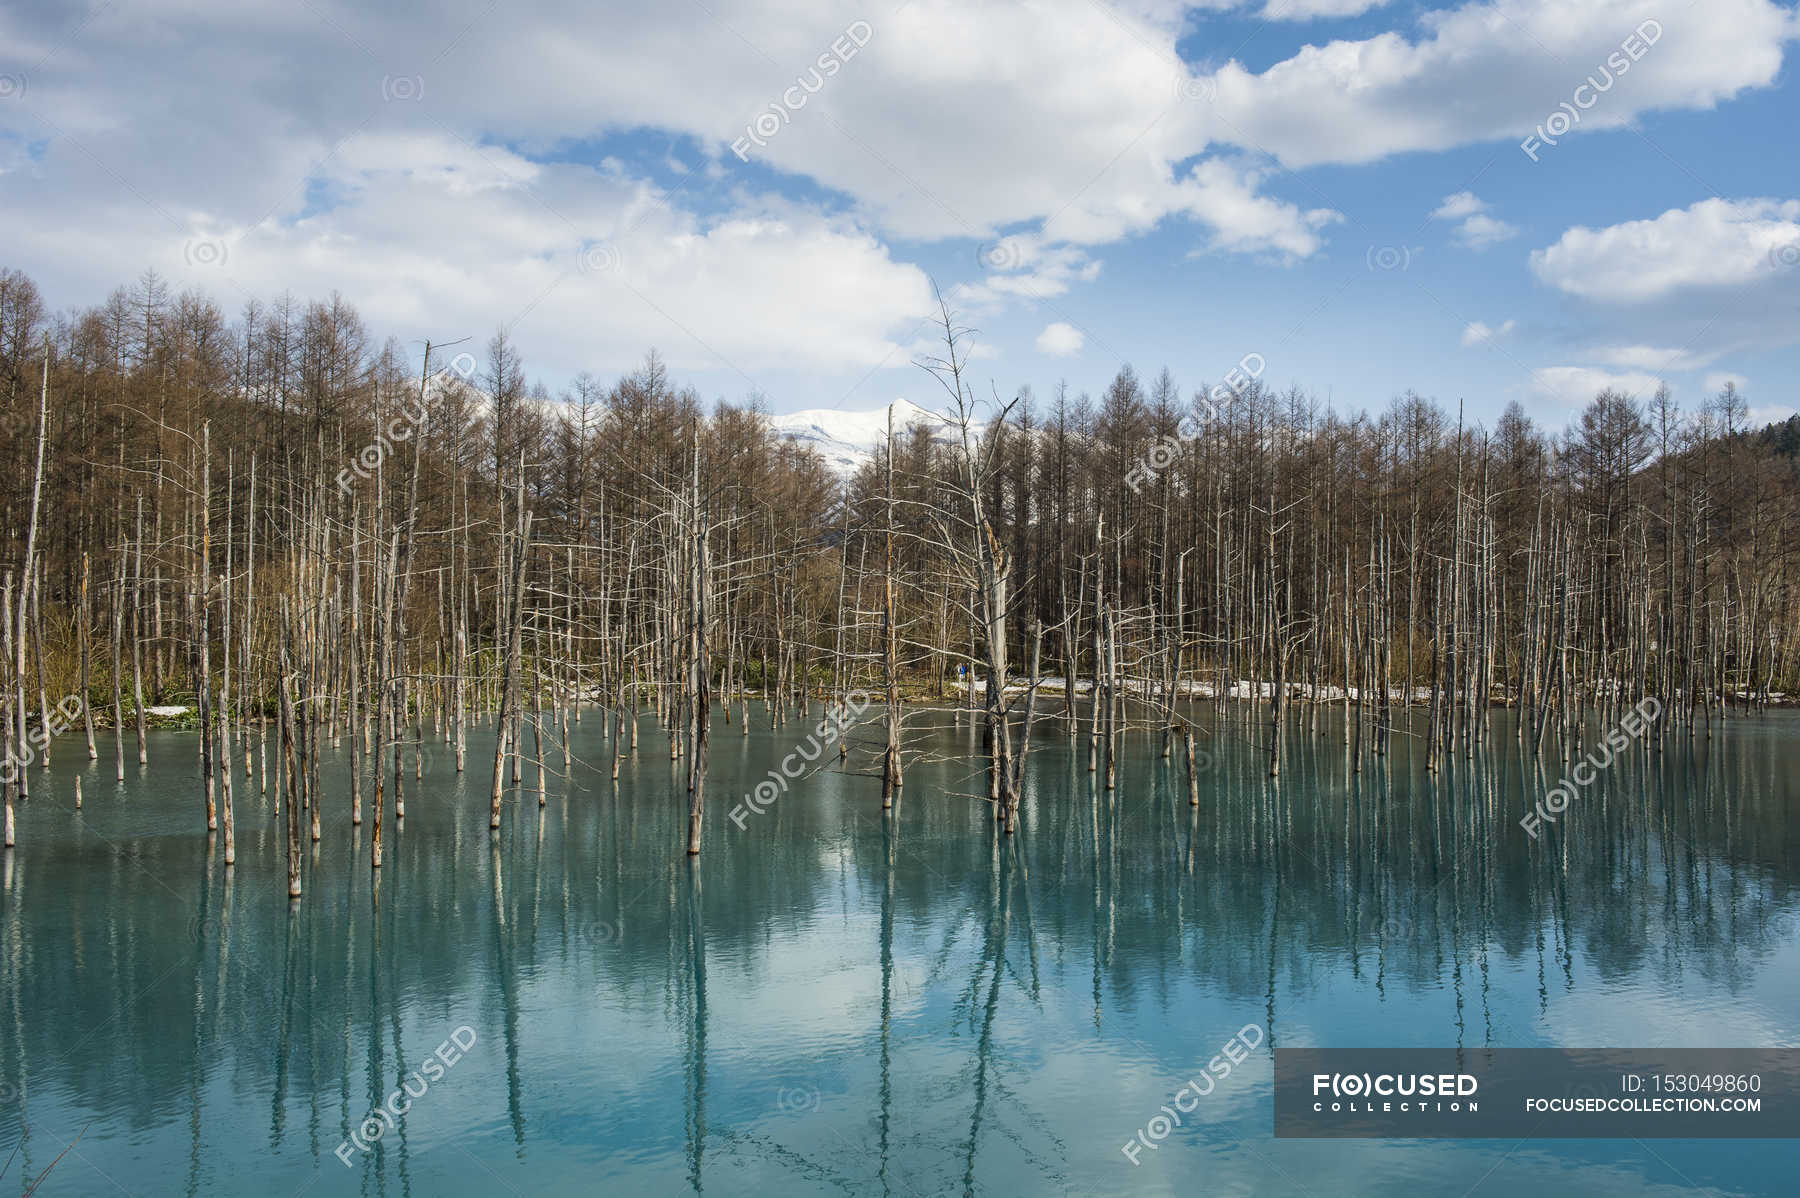 Blue Pond at Daisetsuzan National Park — Stock Photo | #153049860